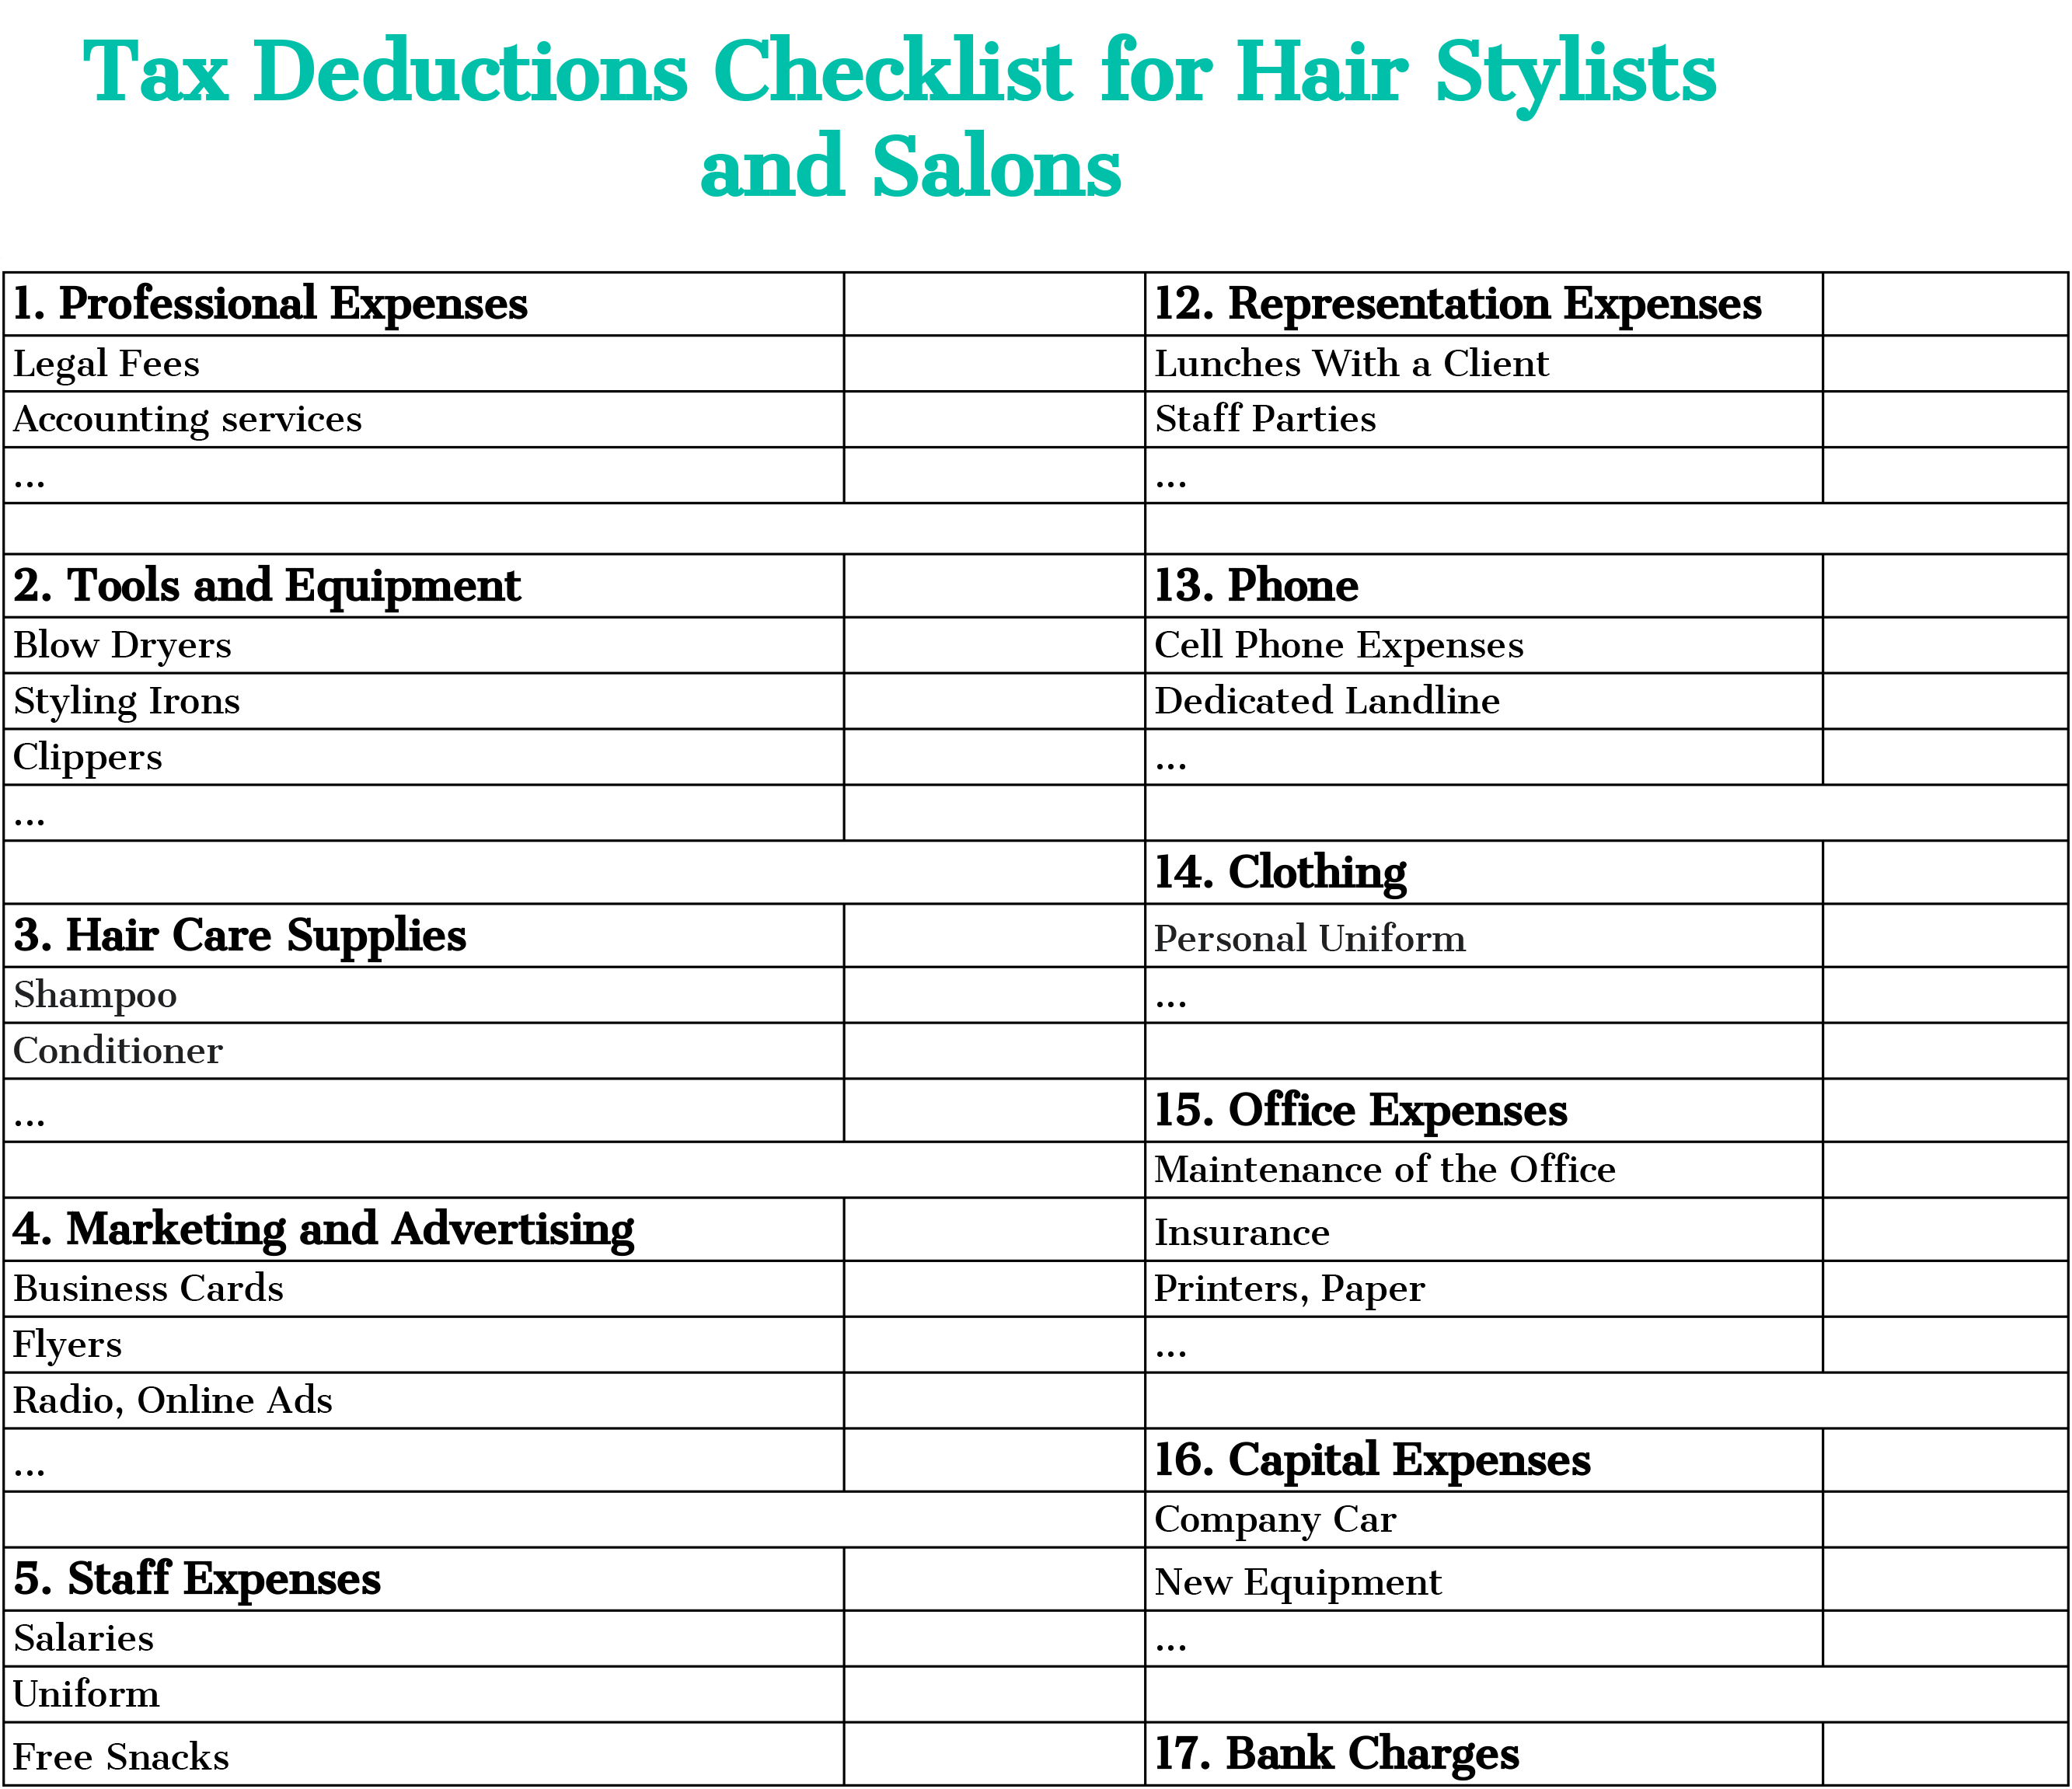 Tax deductions checklist